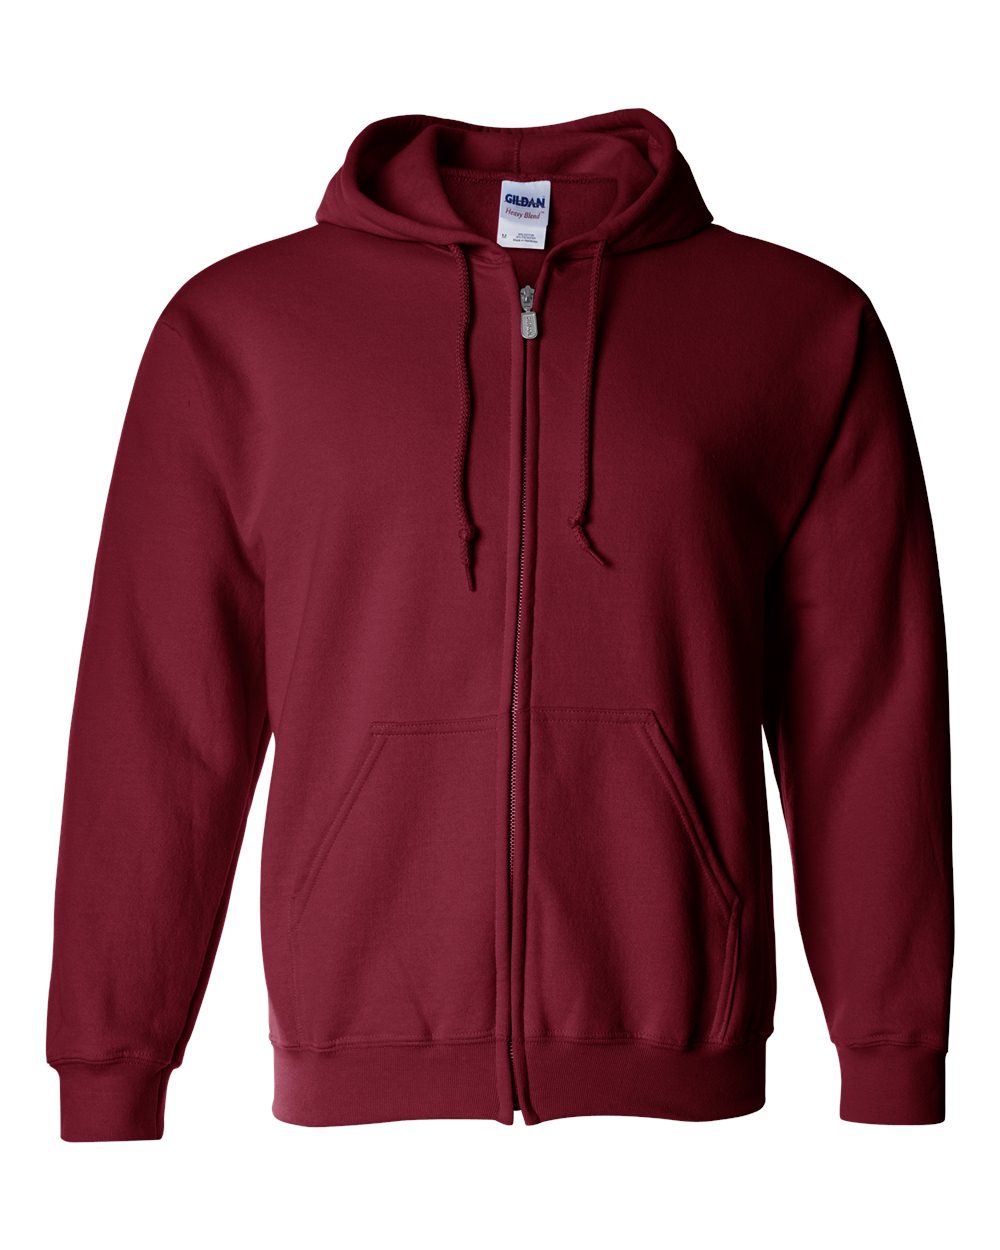 Gildan 18600-Heavy Blend Full Zip Hooded Sweatshirt. $23.08 - Sweatshirts